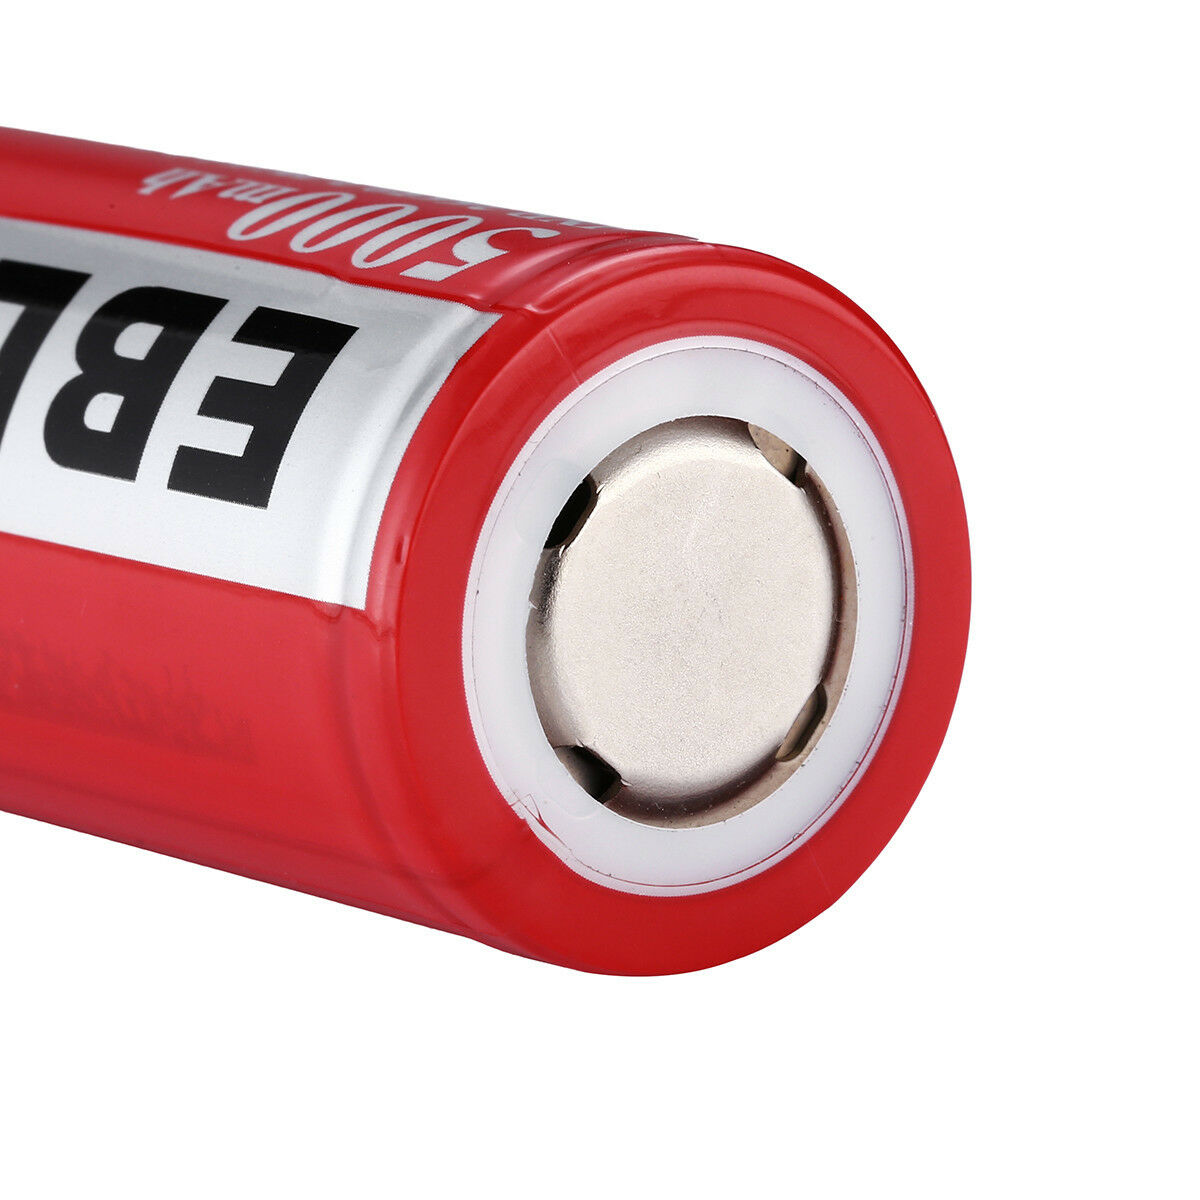 EBL 26650 3.7V Lithium Battery 5000mAh Rechargeable Battery